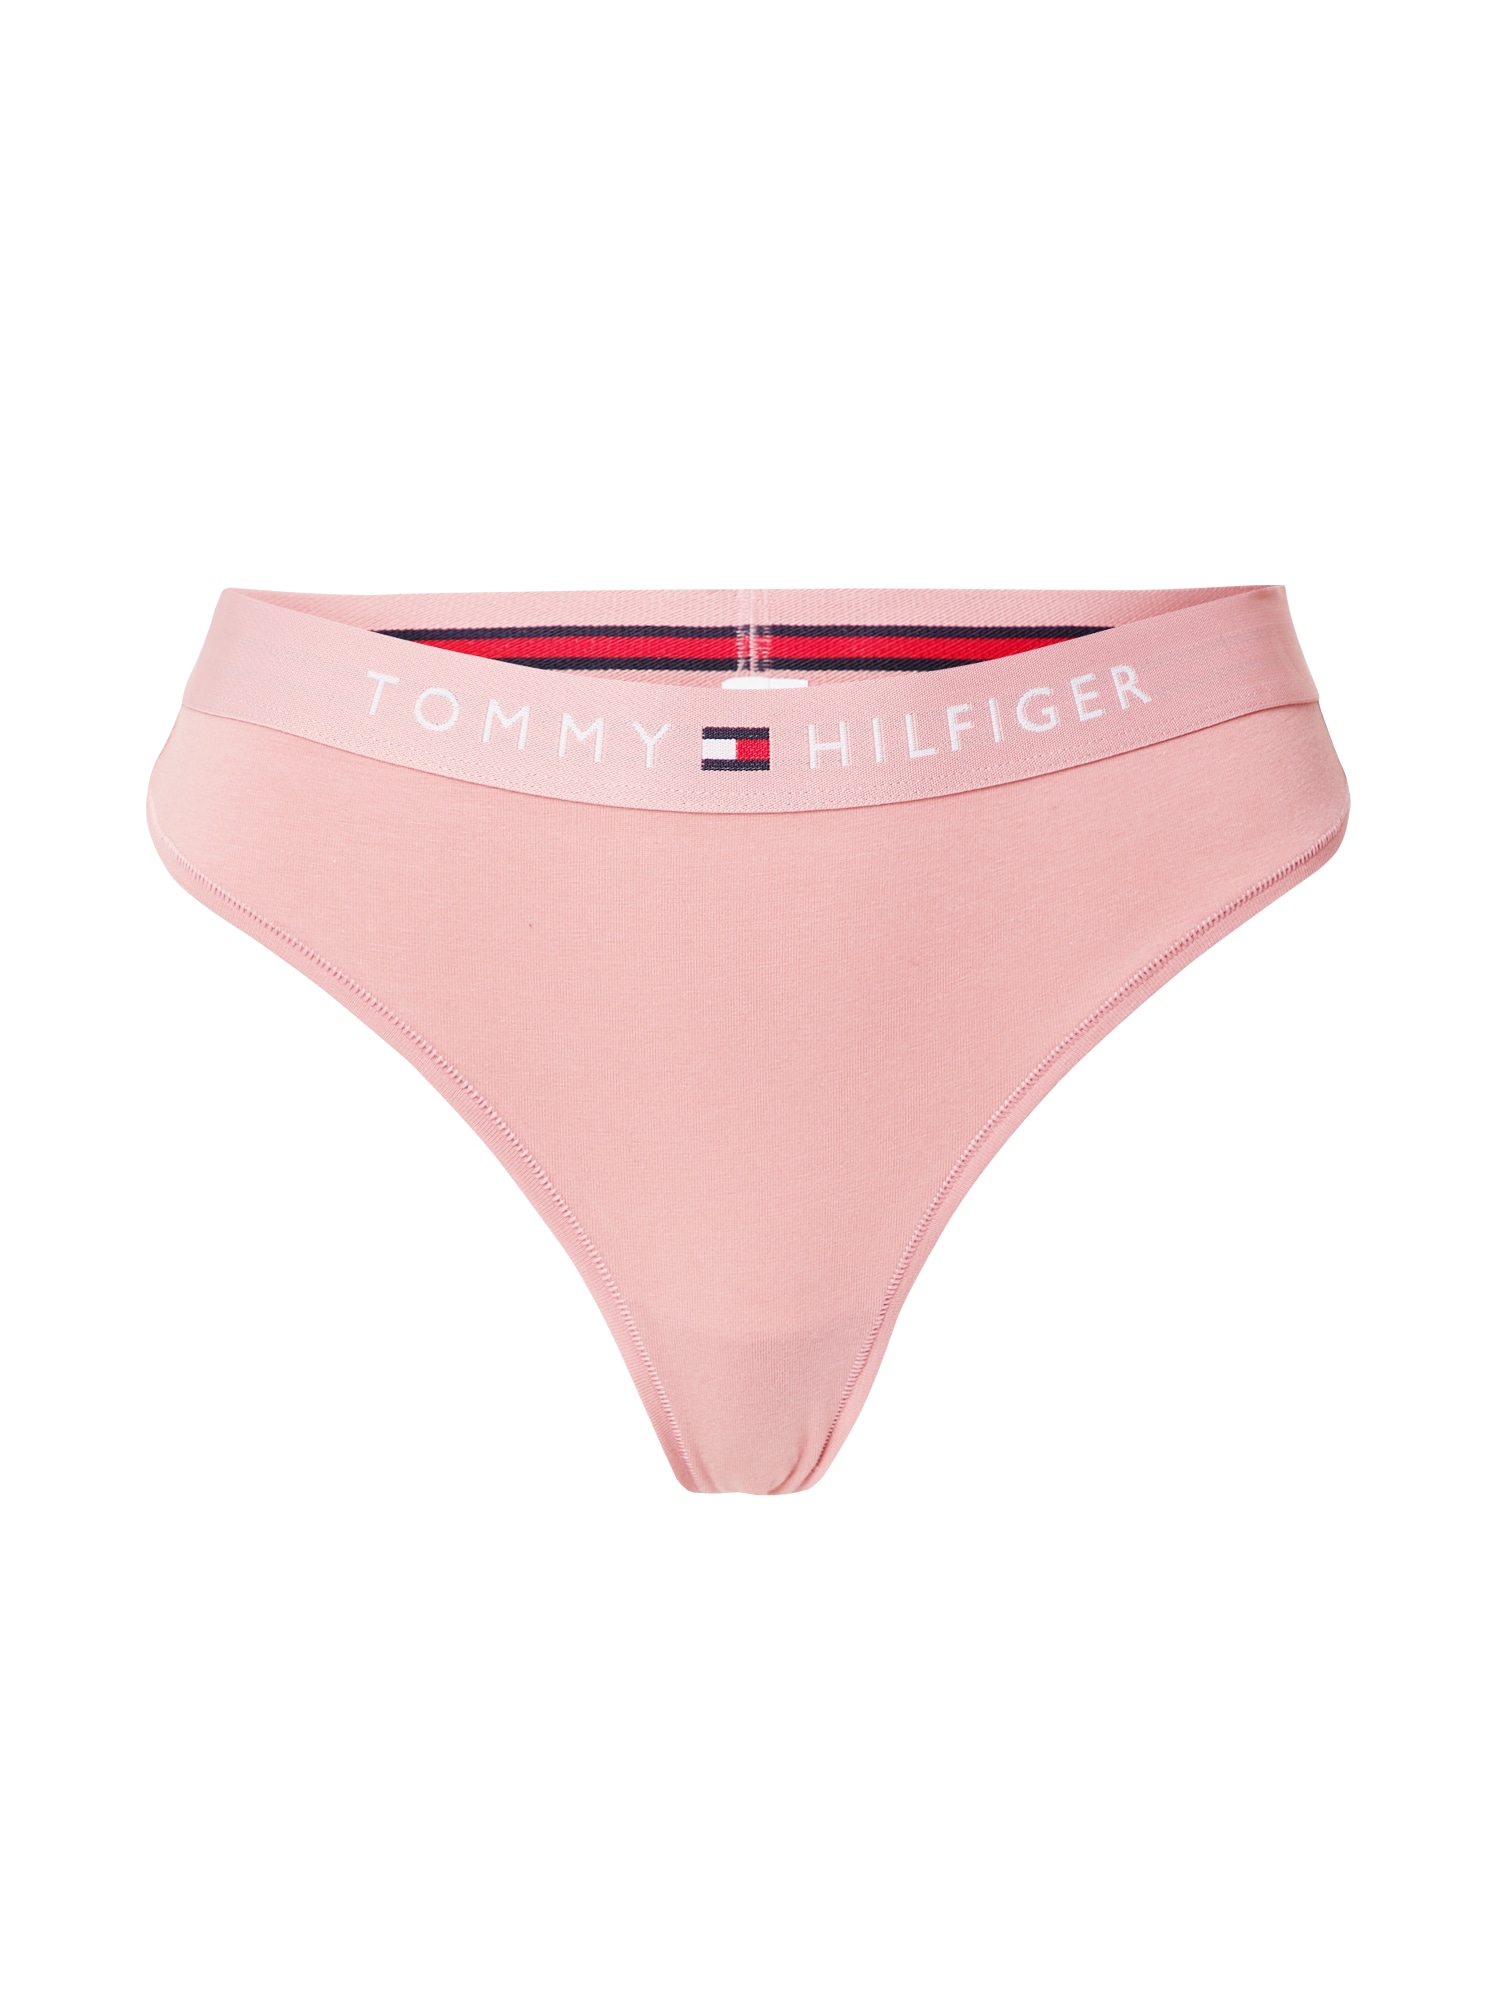 Tommy Hilfiger Underwear Tangá  námornícka modrá / ružová / červená / biela